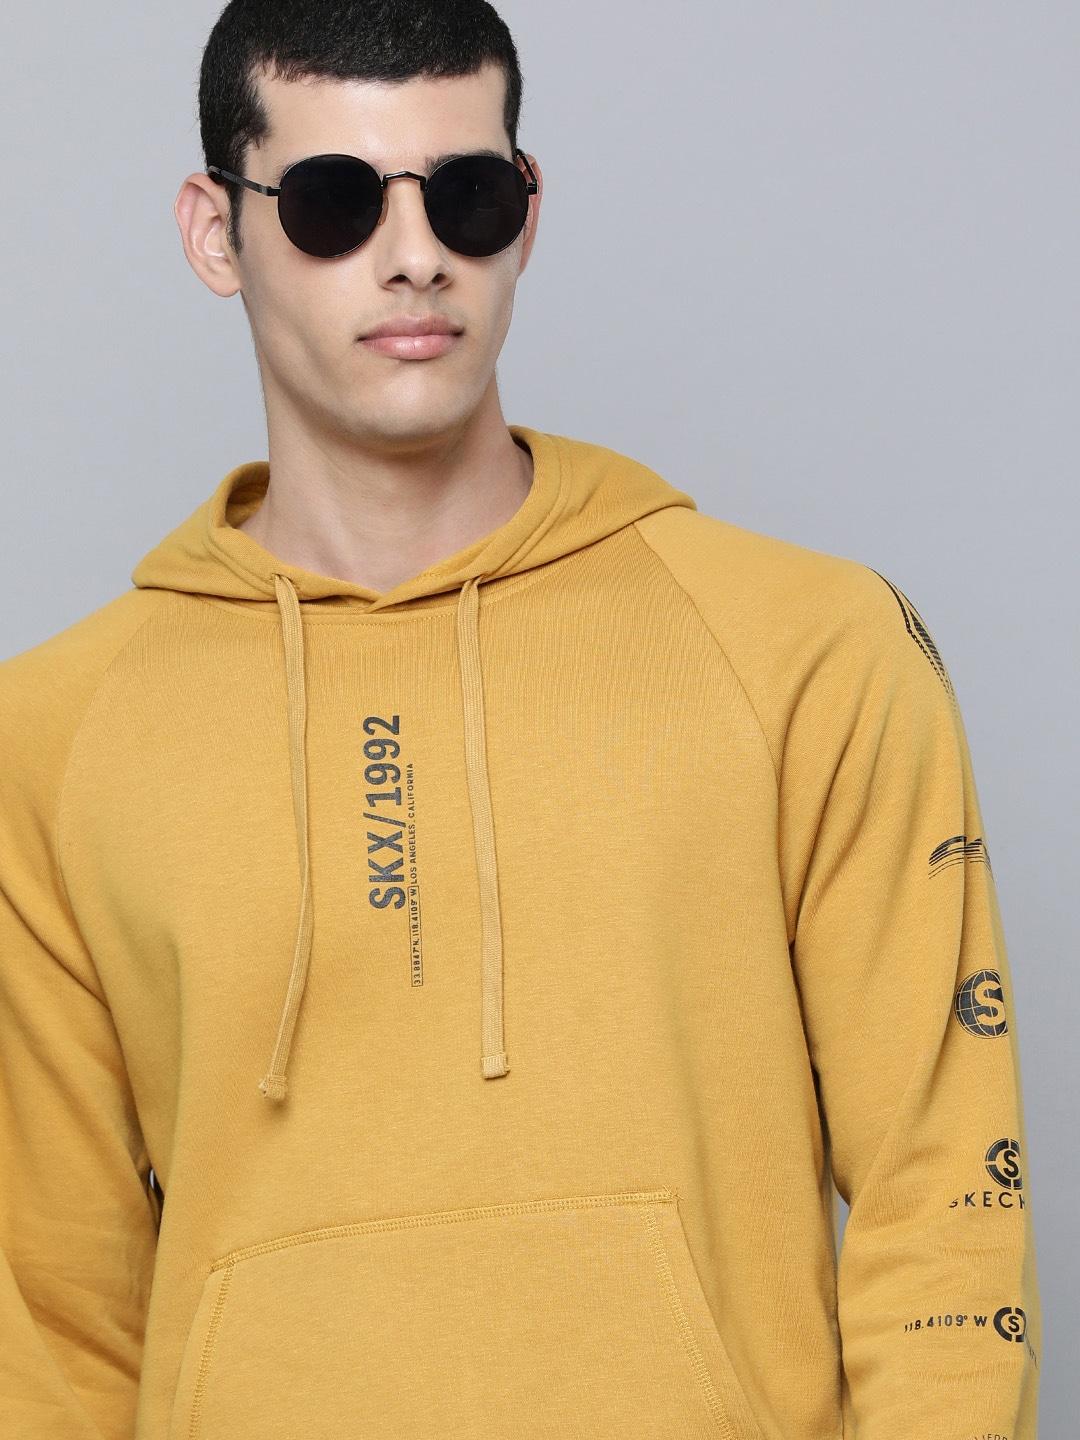 Skechers Men Mustard Yellow Typography Print SKX Varocity Hooded Pullover Sweatshirt